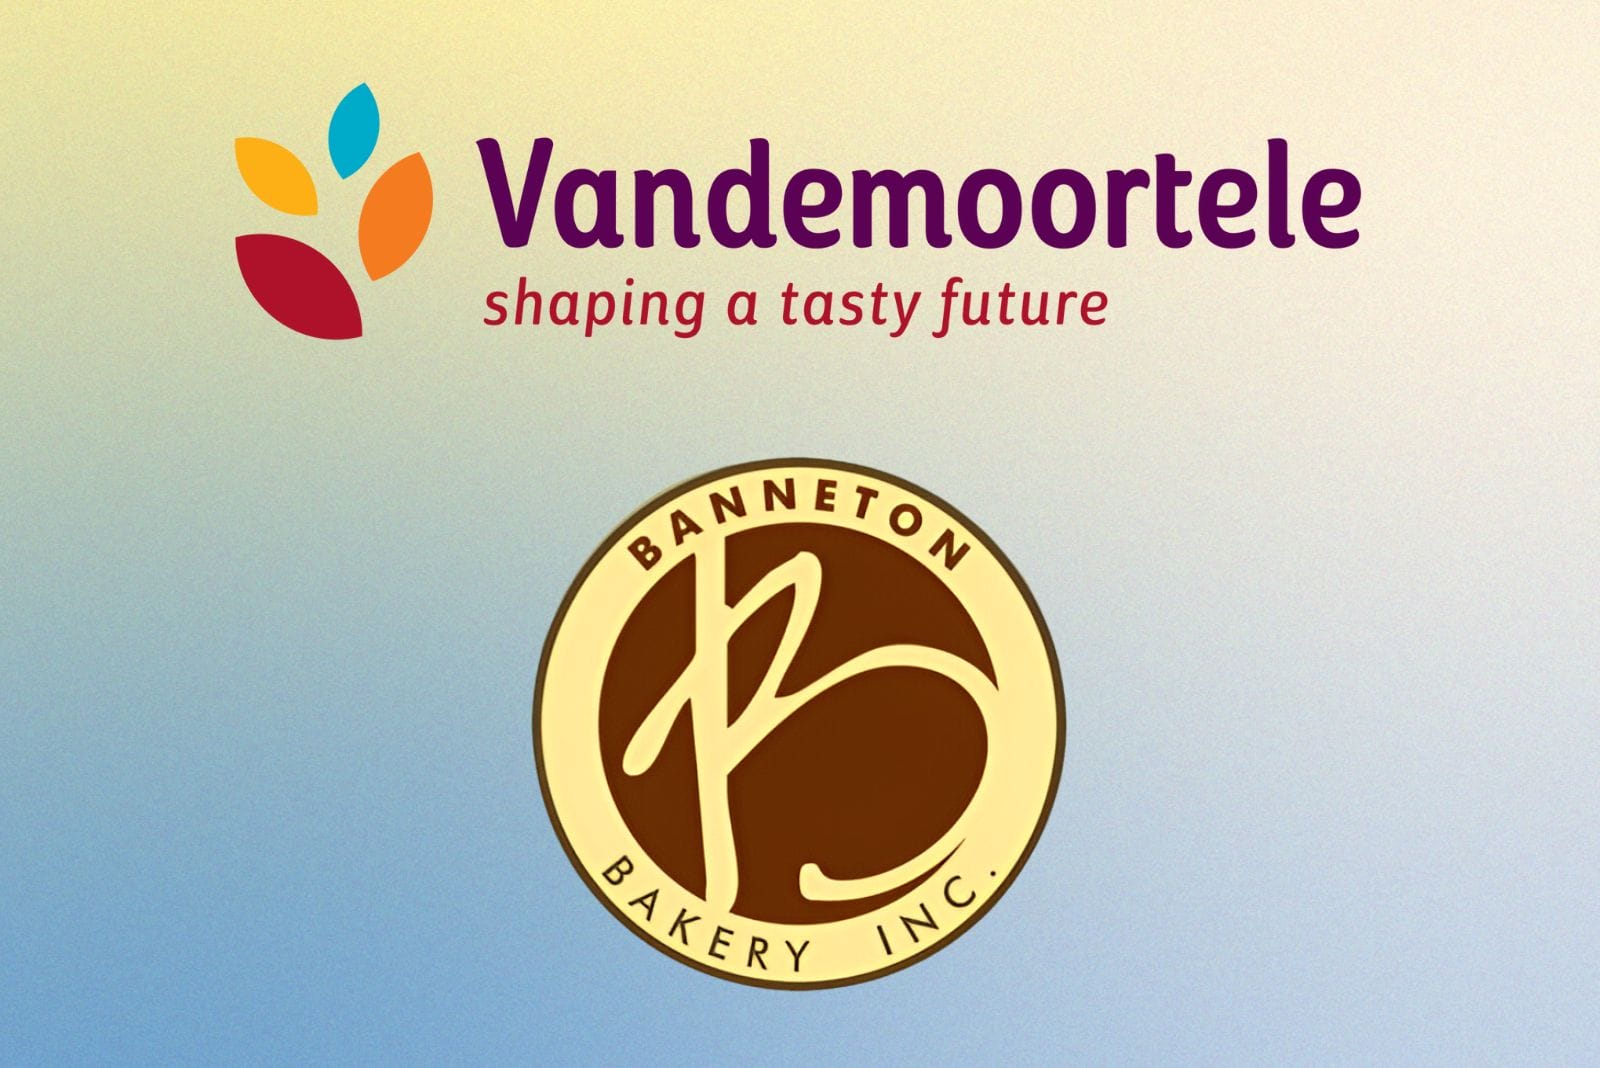 Vandemoortele and Banneton Bakery logos